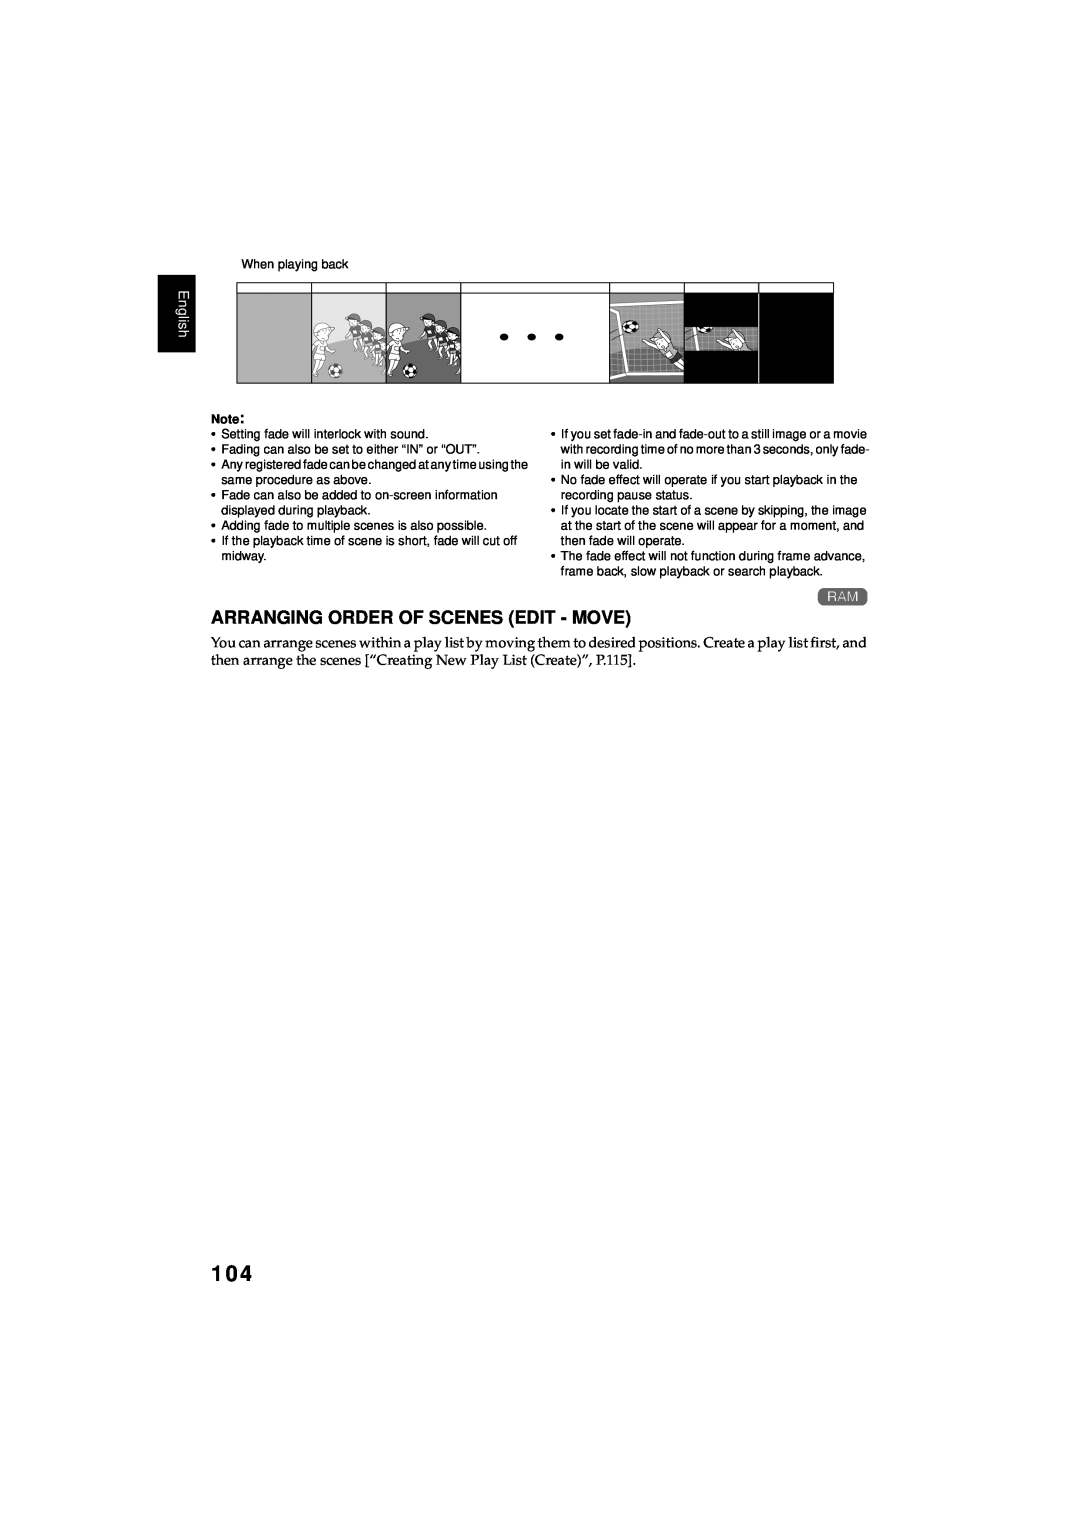 Hitachi DZMV380E, DZMV350E instruction manual Arranging Order Of Scenes Edit - Move, English 